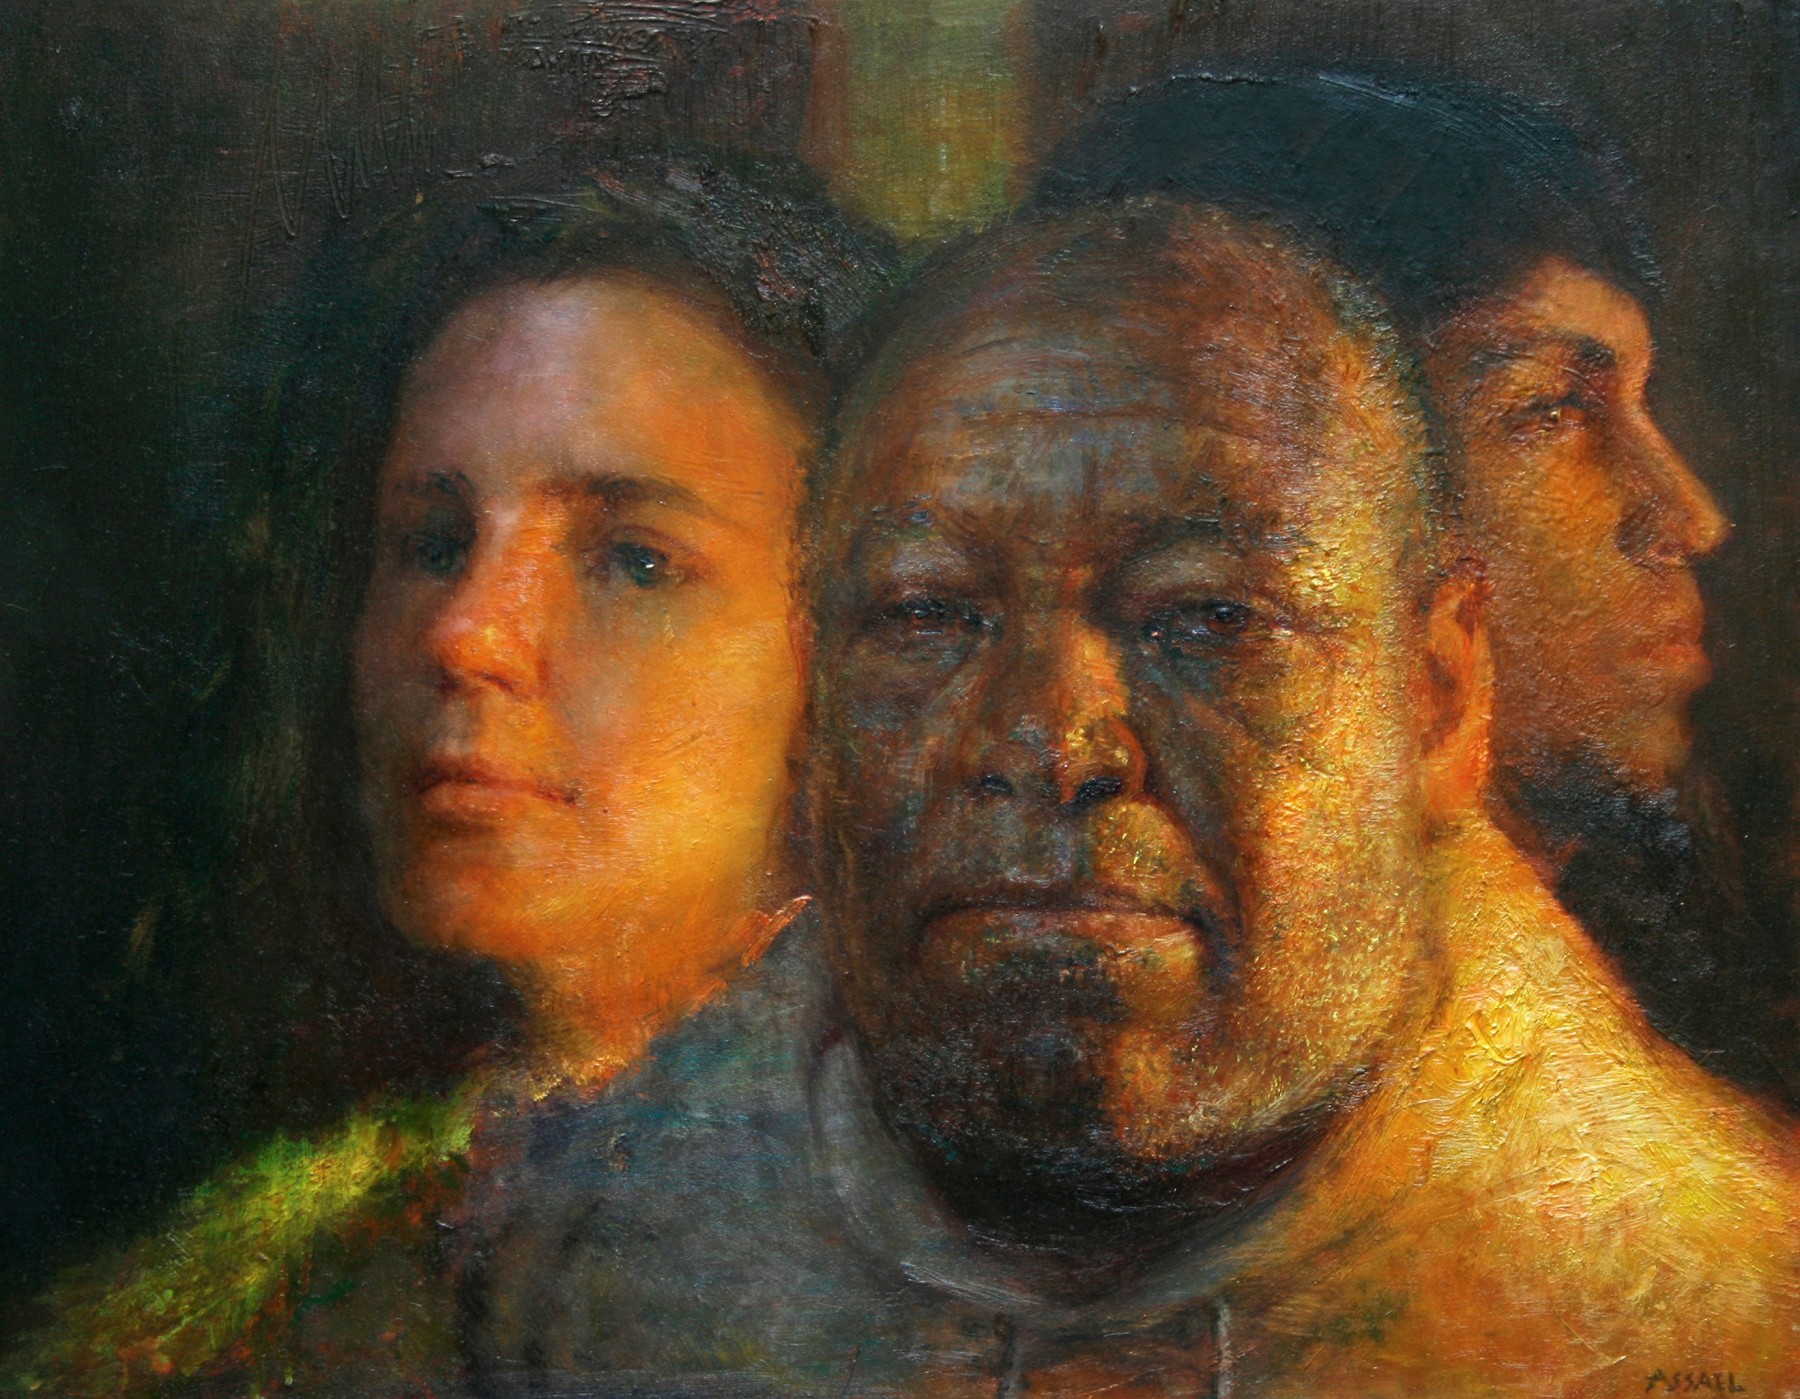 Steven Assael, Otis, Martha and Ben, 2008, oil on panel, 14 x 18 inches